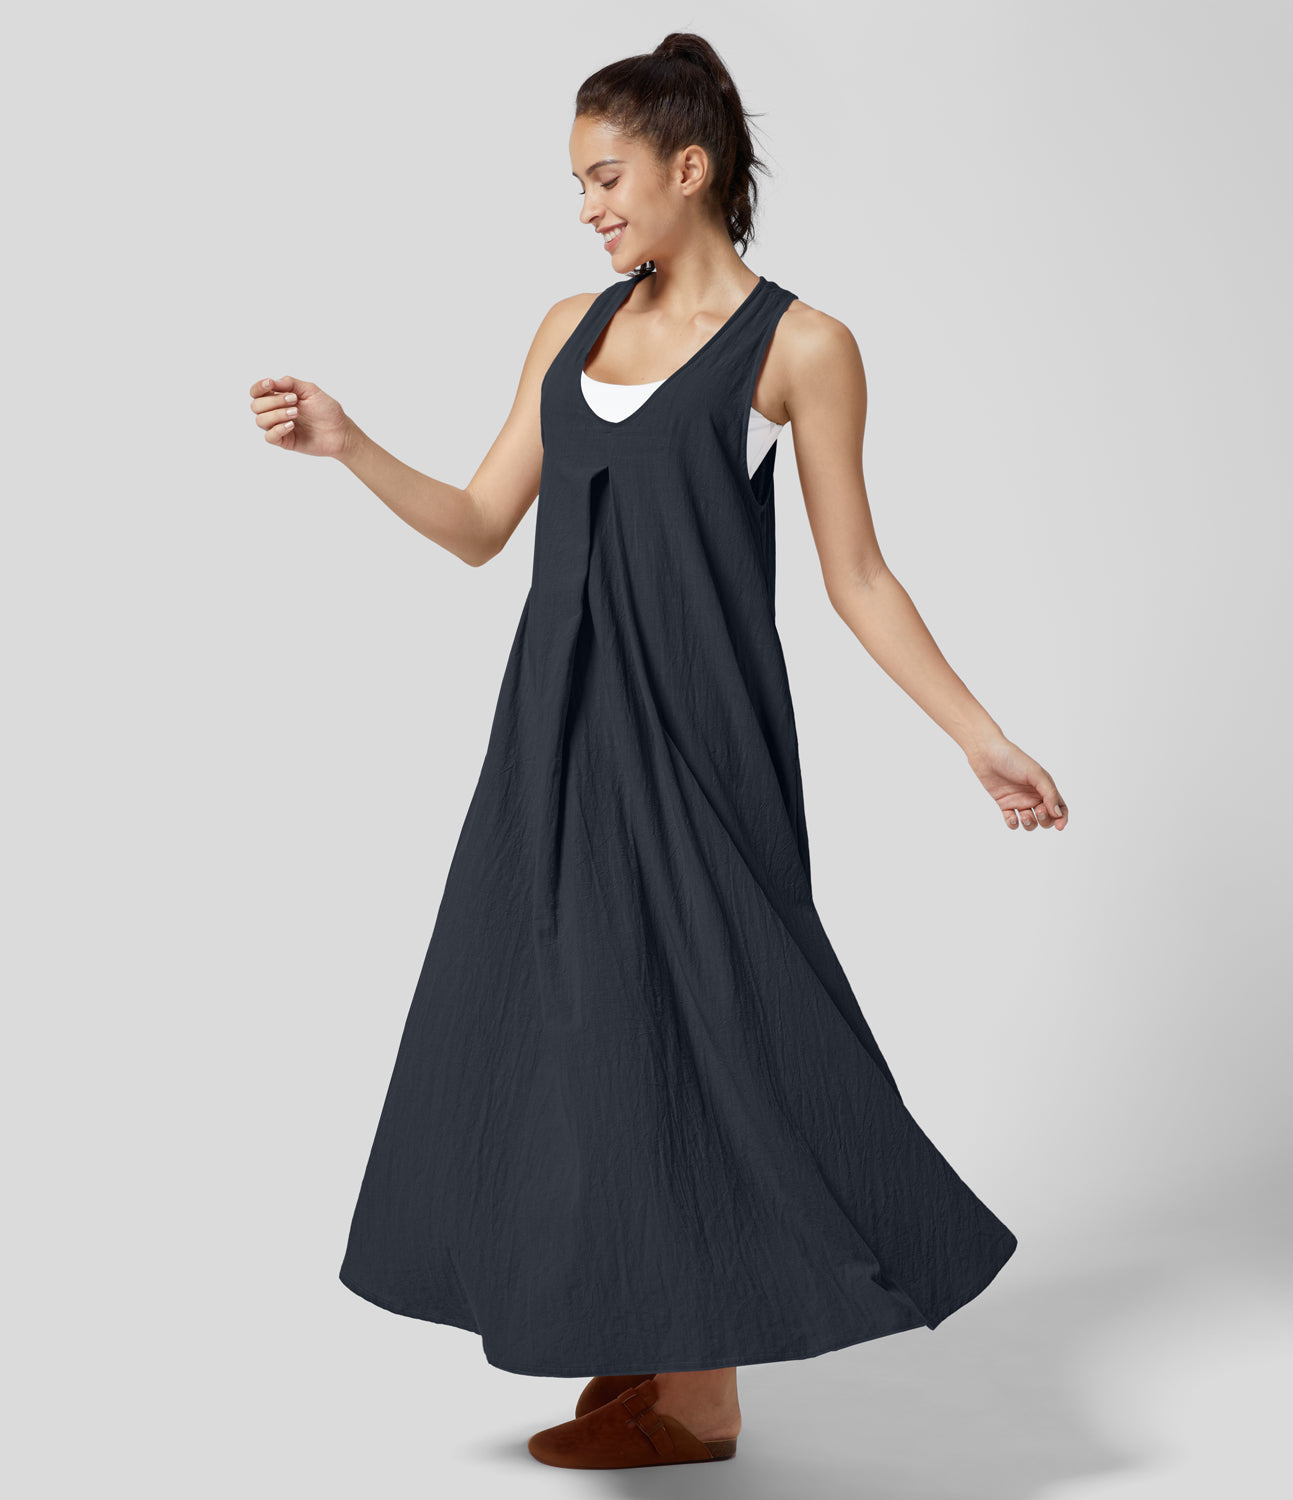 

Halara U Neck Sleeveless Plicated Side Pocket Flowy Maxi Casual Linen-Feel Dress Casual Dress - Total Eclipse -  slip dress beach dress